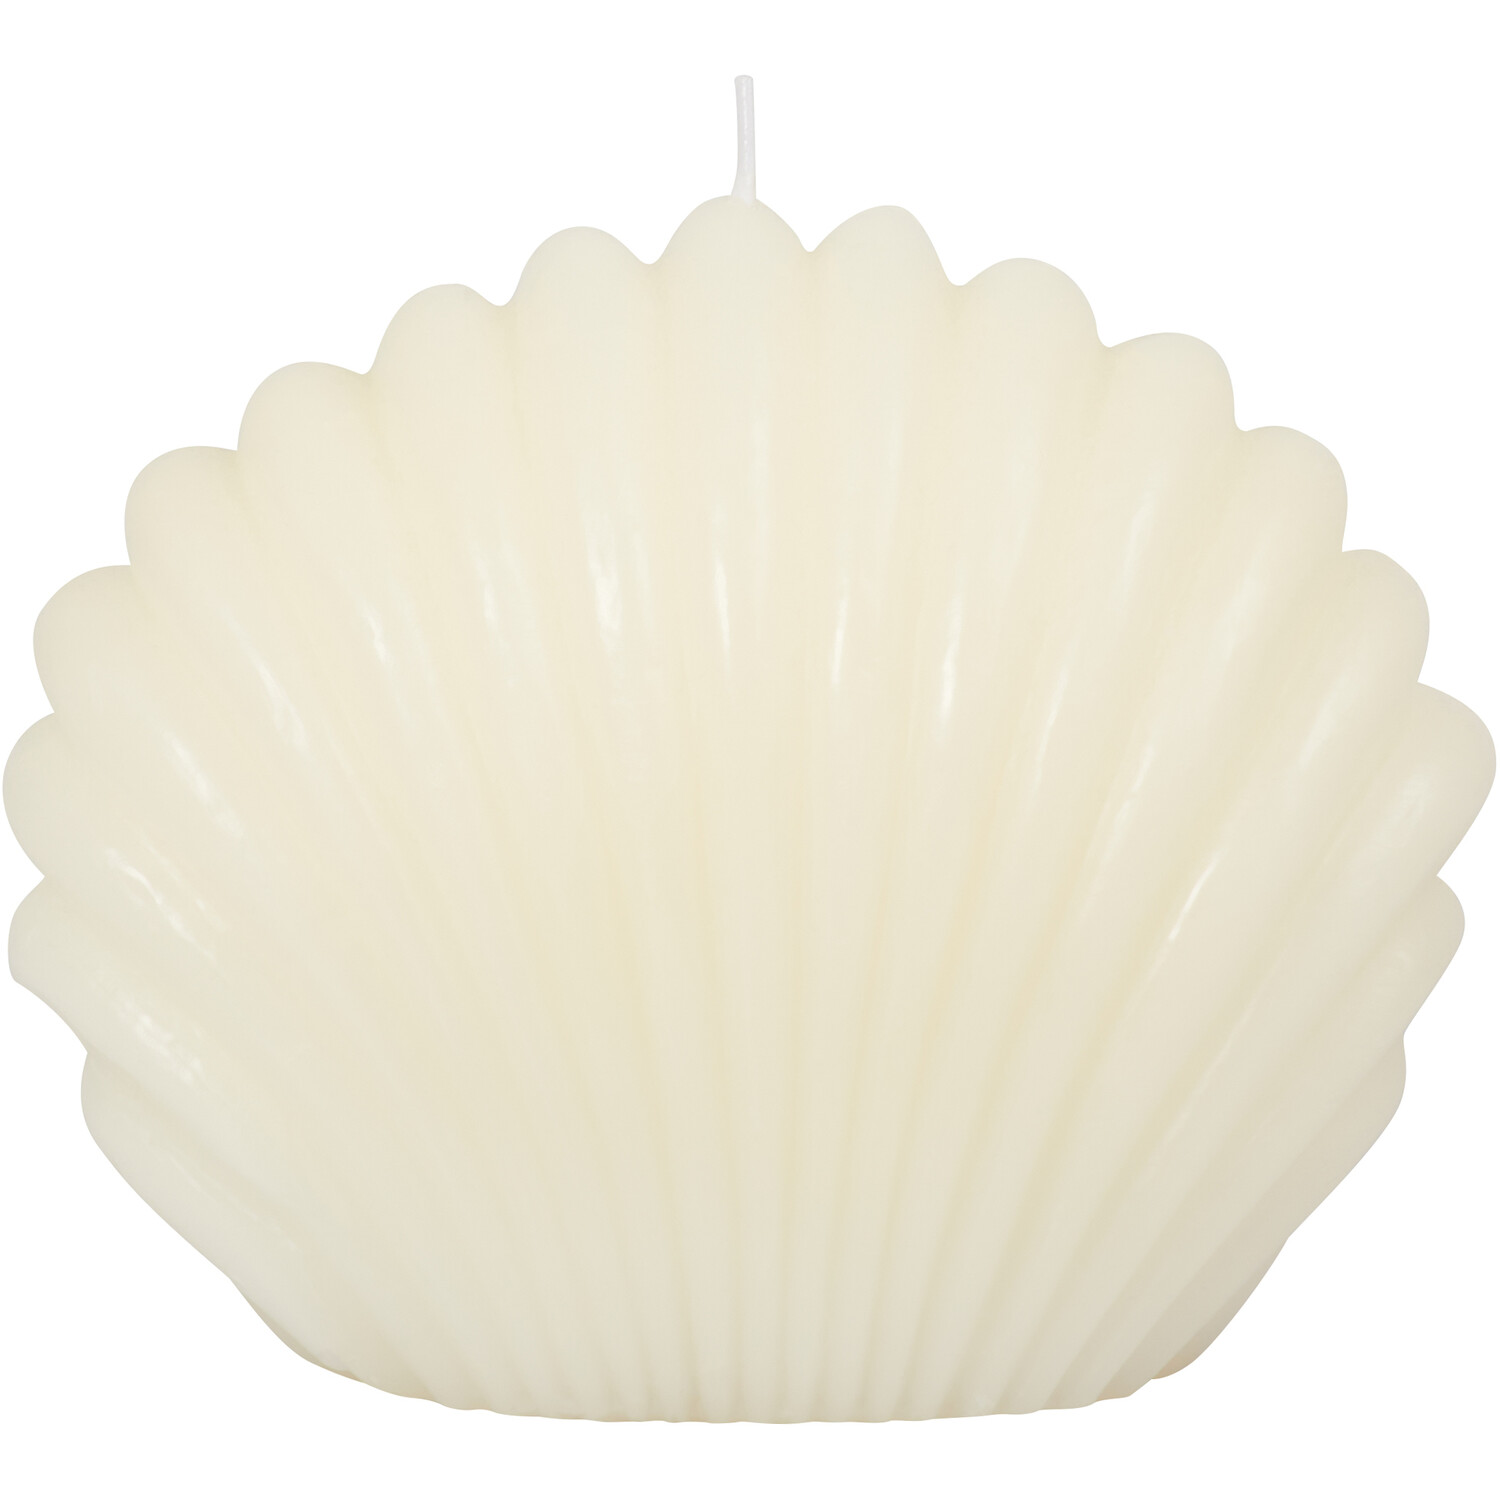 Shell Shaped Candle - White Image 1